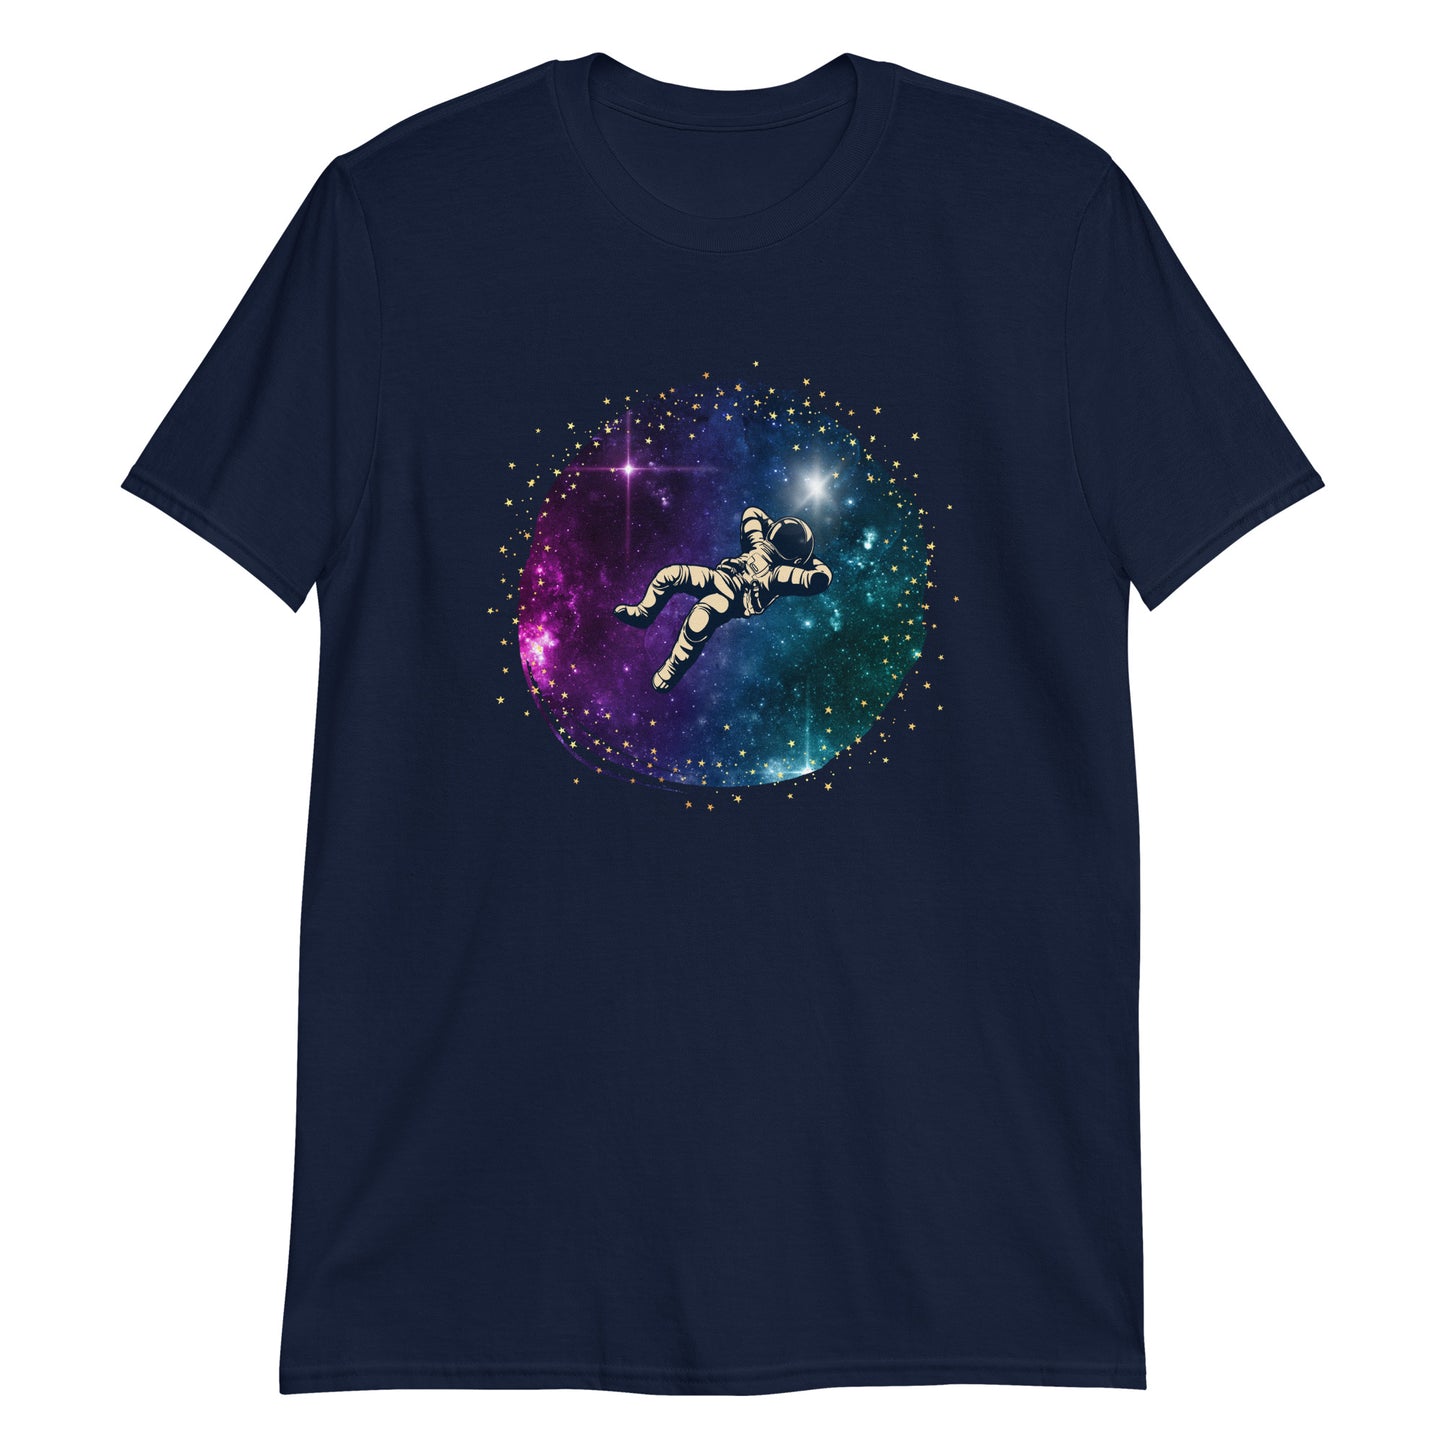 Spaceman - Short-Sleeve Unisex T-Shirt Navy Unisex T-shirt Space